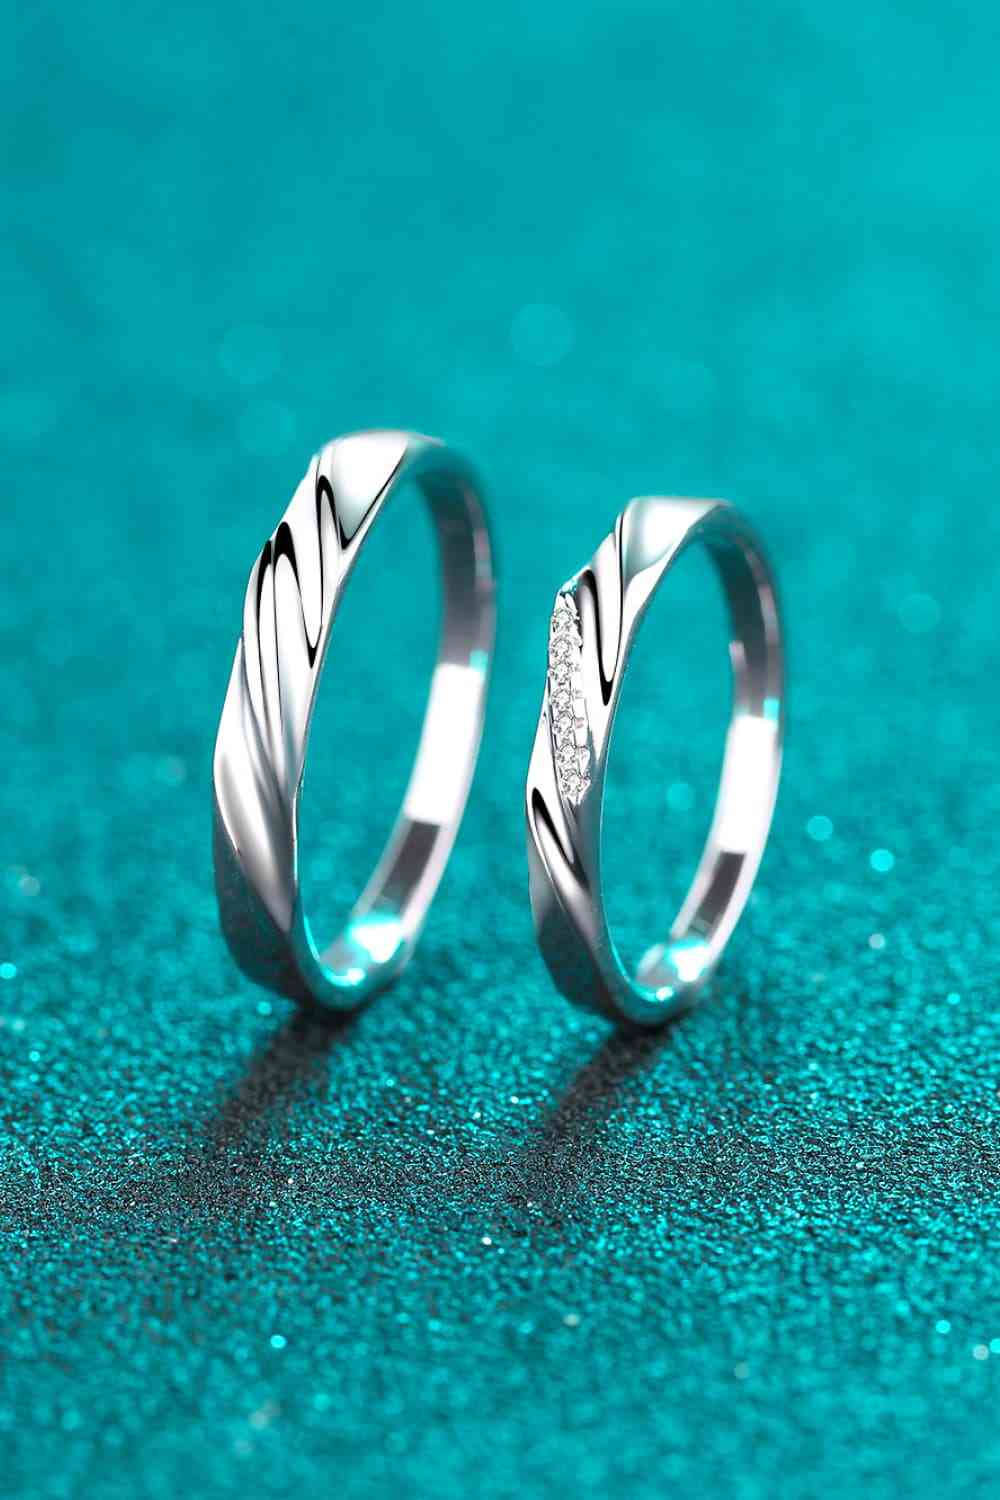 Minimalist 925 Sterling Silver Rhodium-Plated Ring - Men or Women